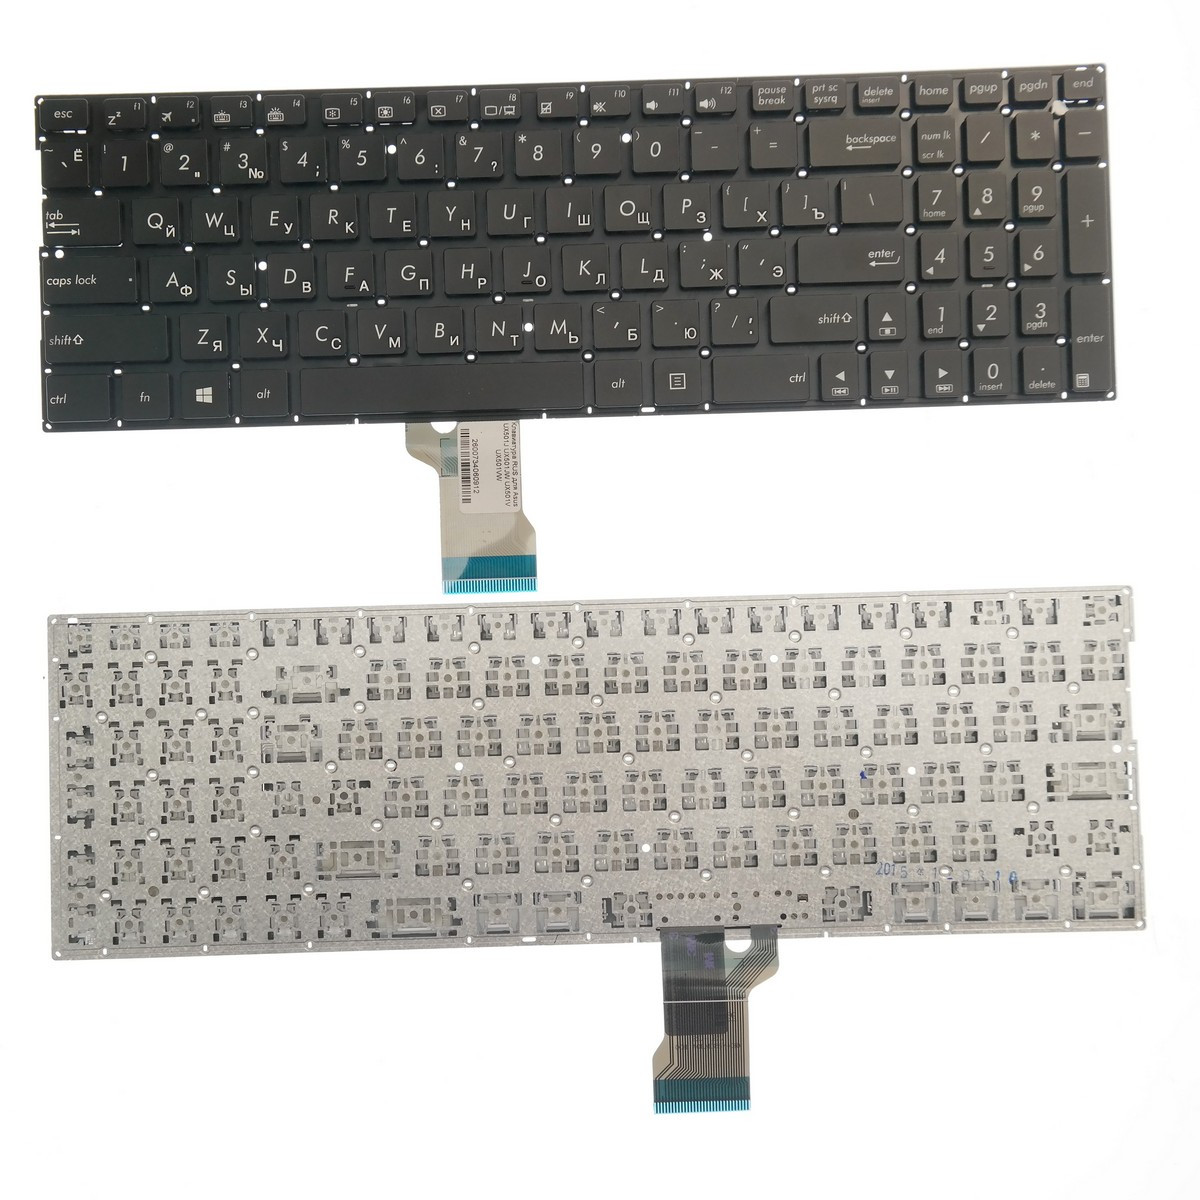 Клавиатура для ноутбука Asus VivoBook X201 X201E X202 X202E S200E черная под рамку и других моделей ноутбуков